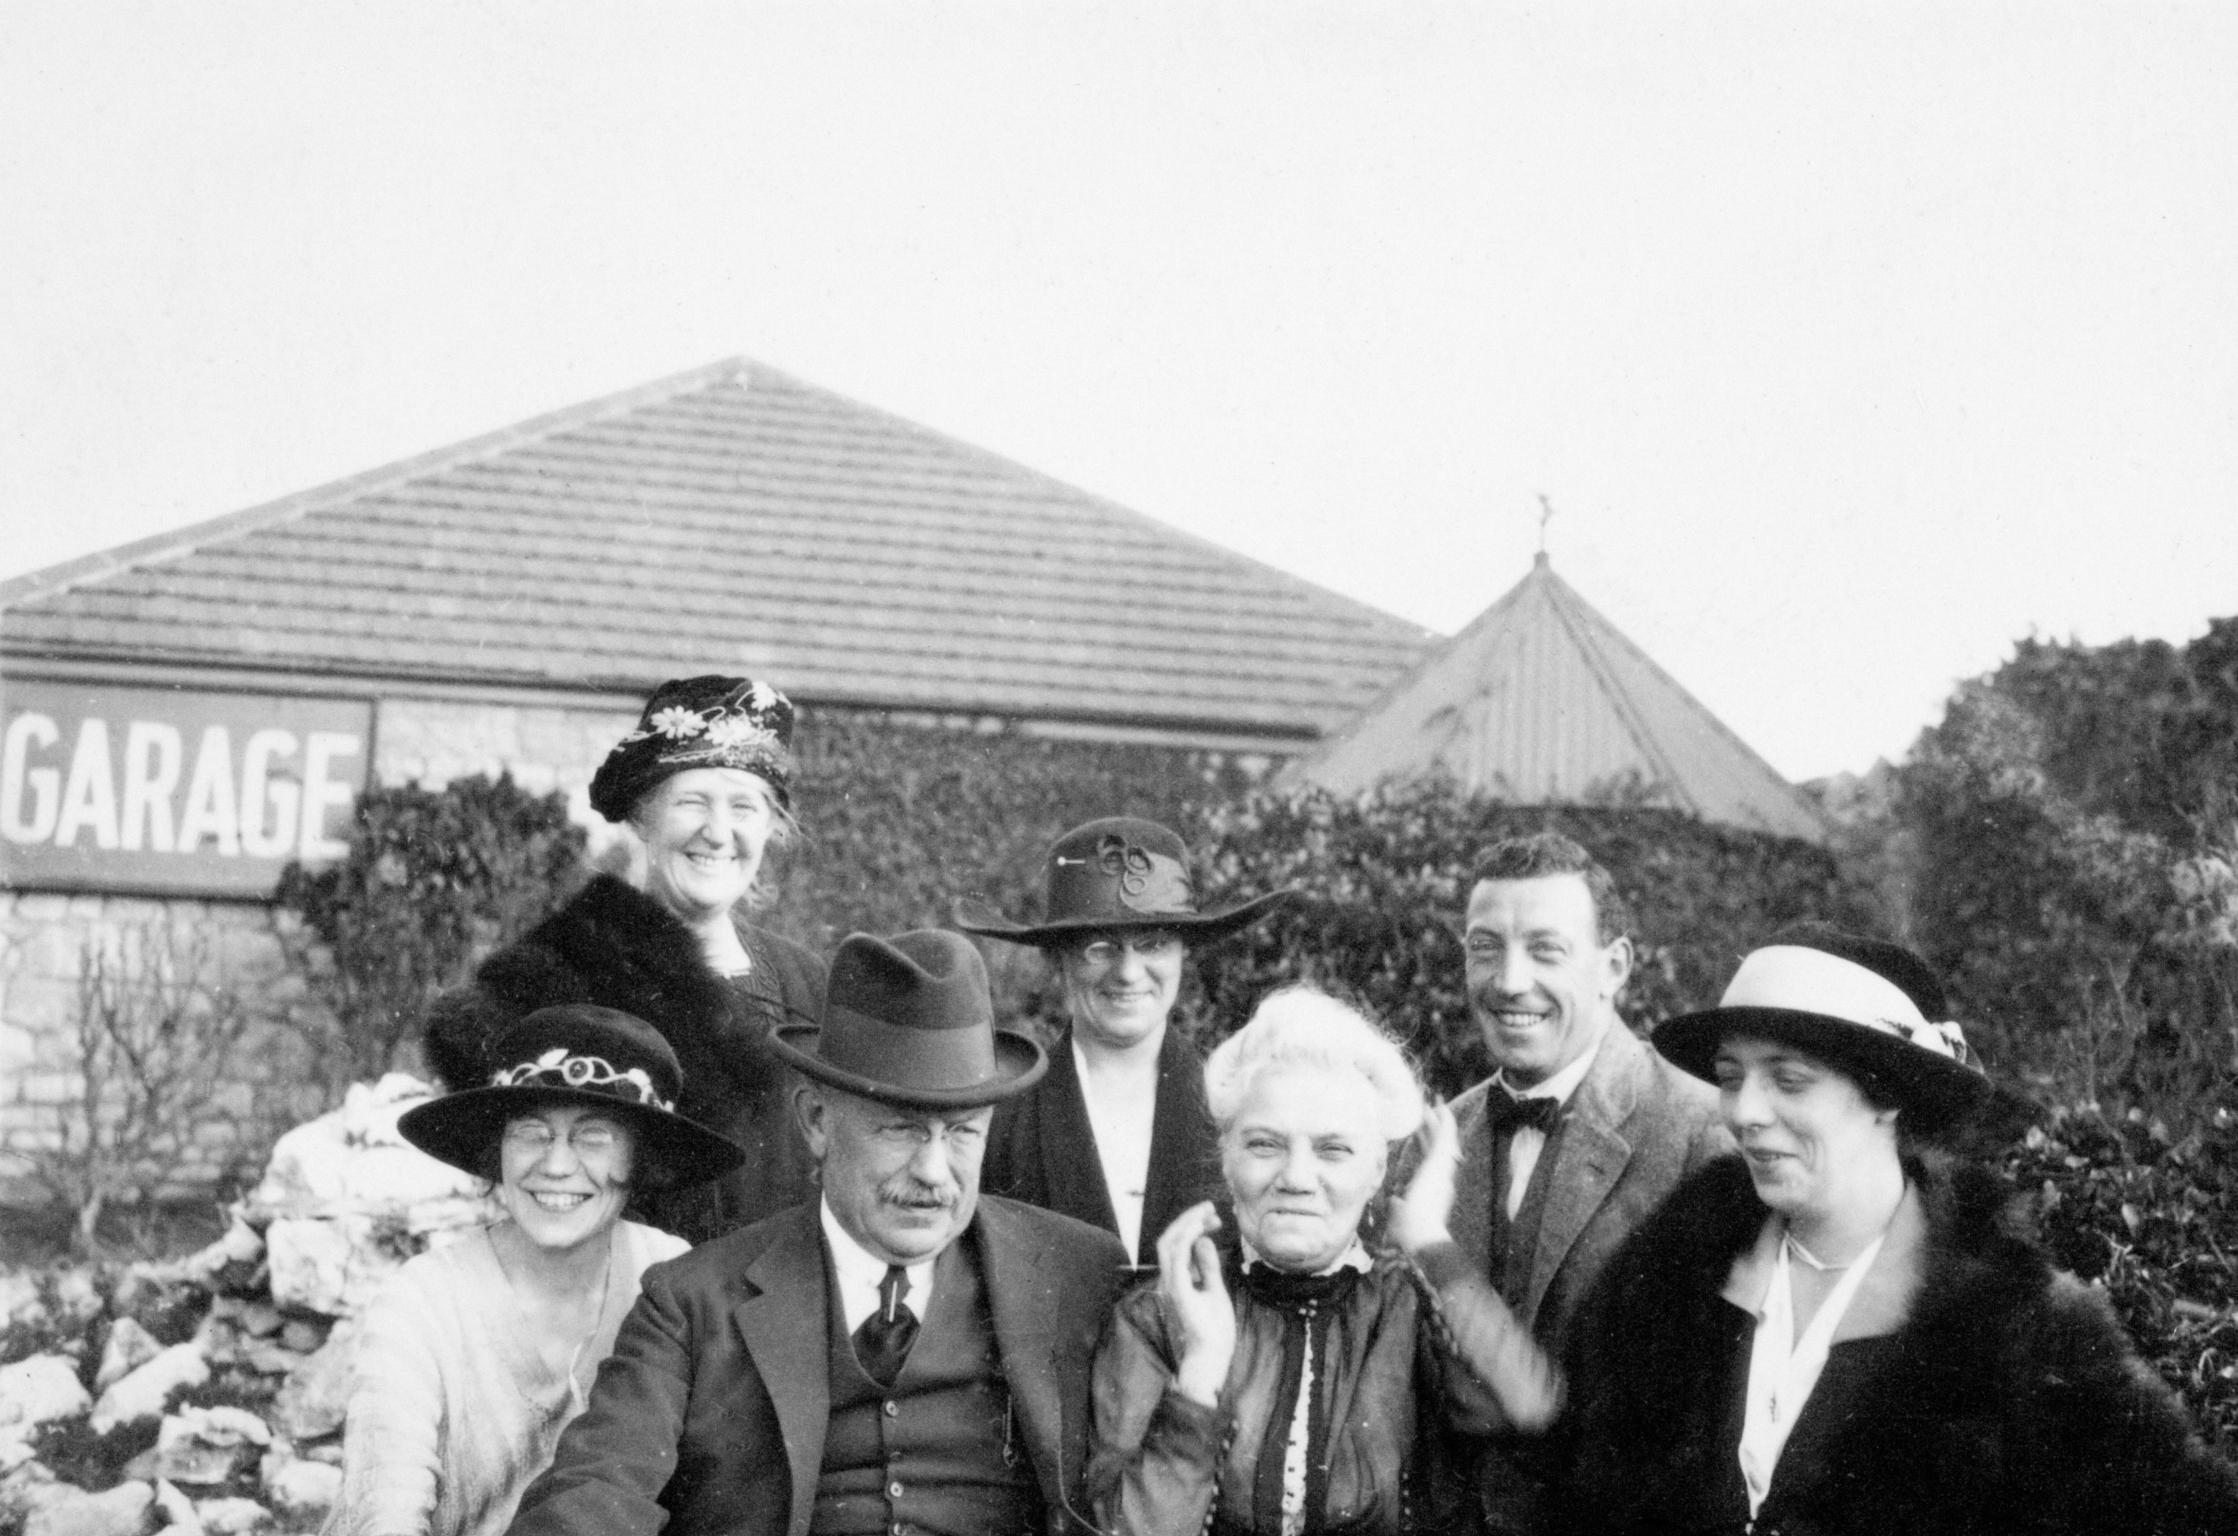 Sir William Reardon Smith and family, photograph